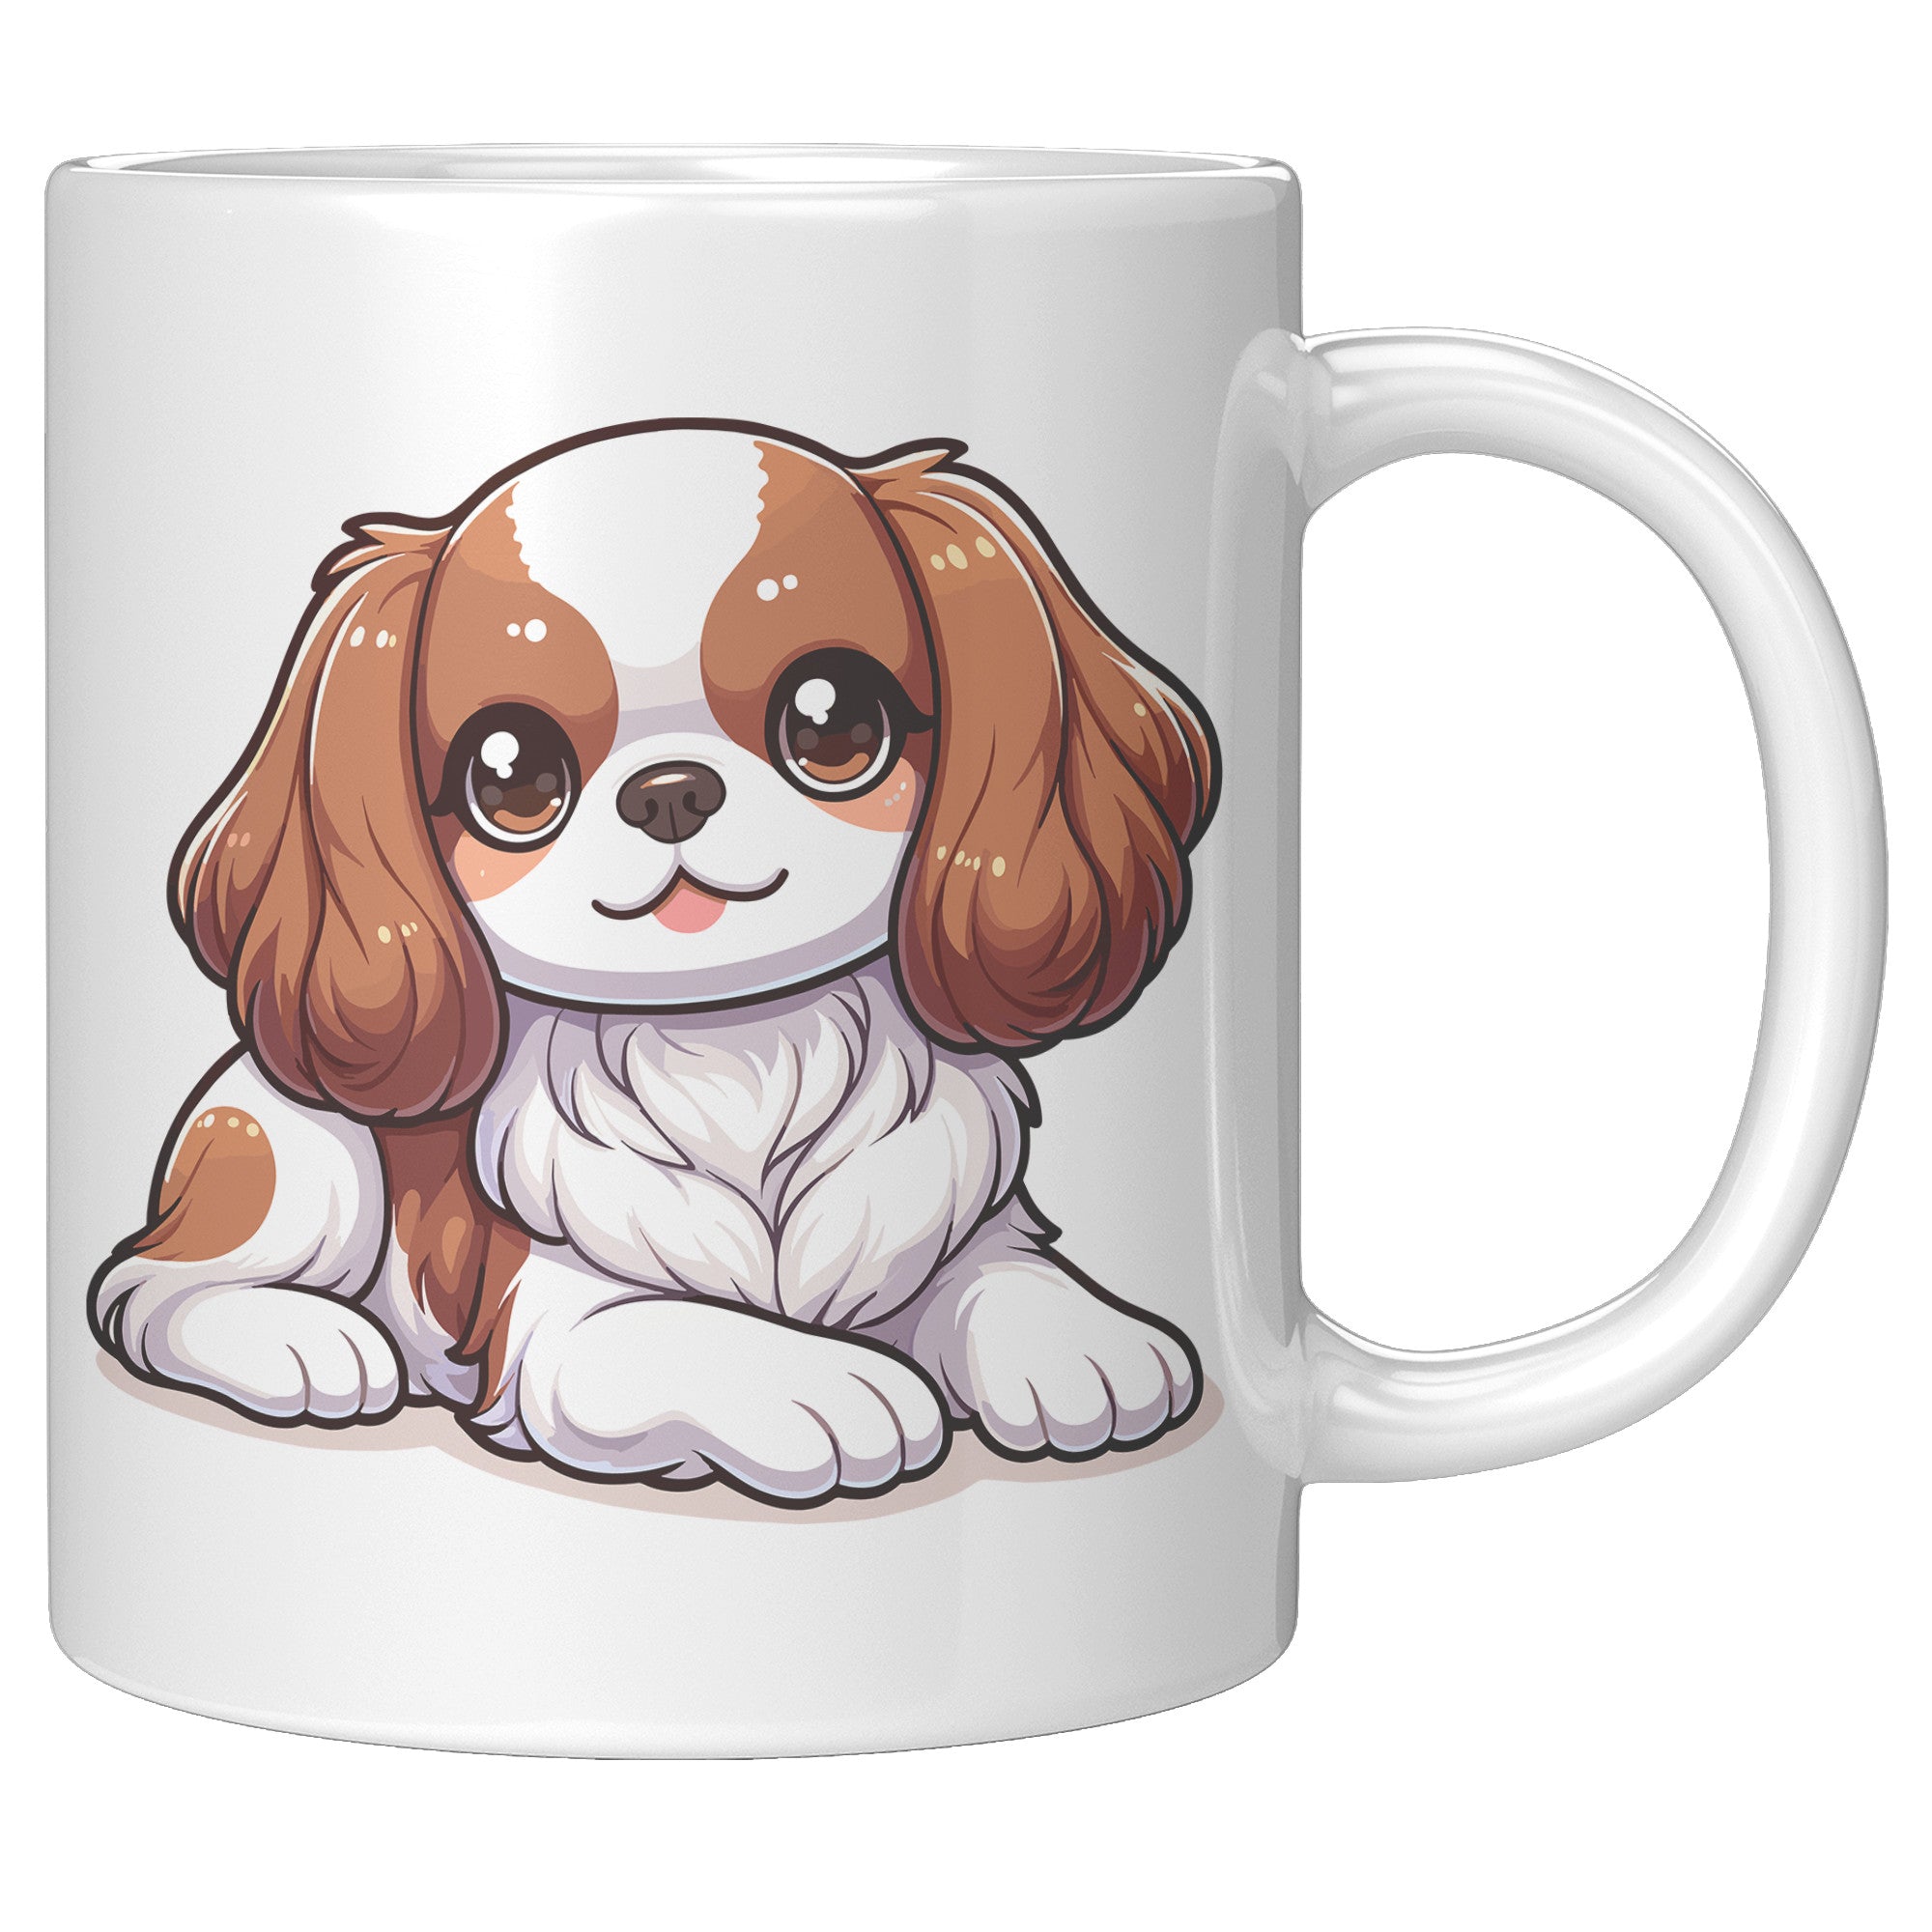 11oz Cute Cavalier King Charles Spaniel Coffee Mug - Cartoon Dog Lover Coffee Mug - Perfect Gift for Spaniel Owners - Adorable Puppy Mug - A